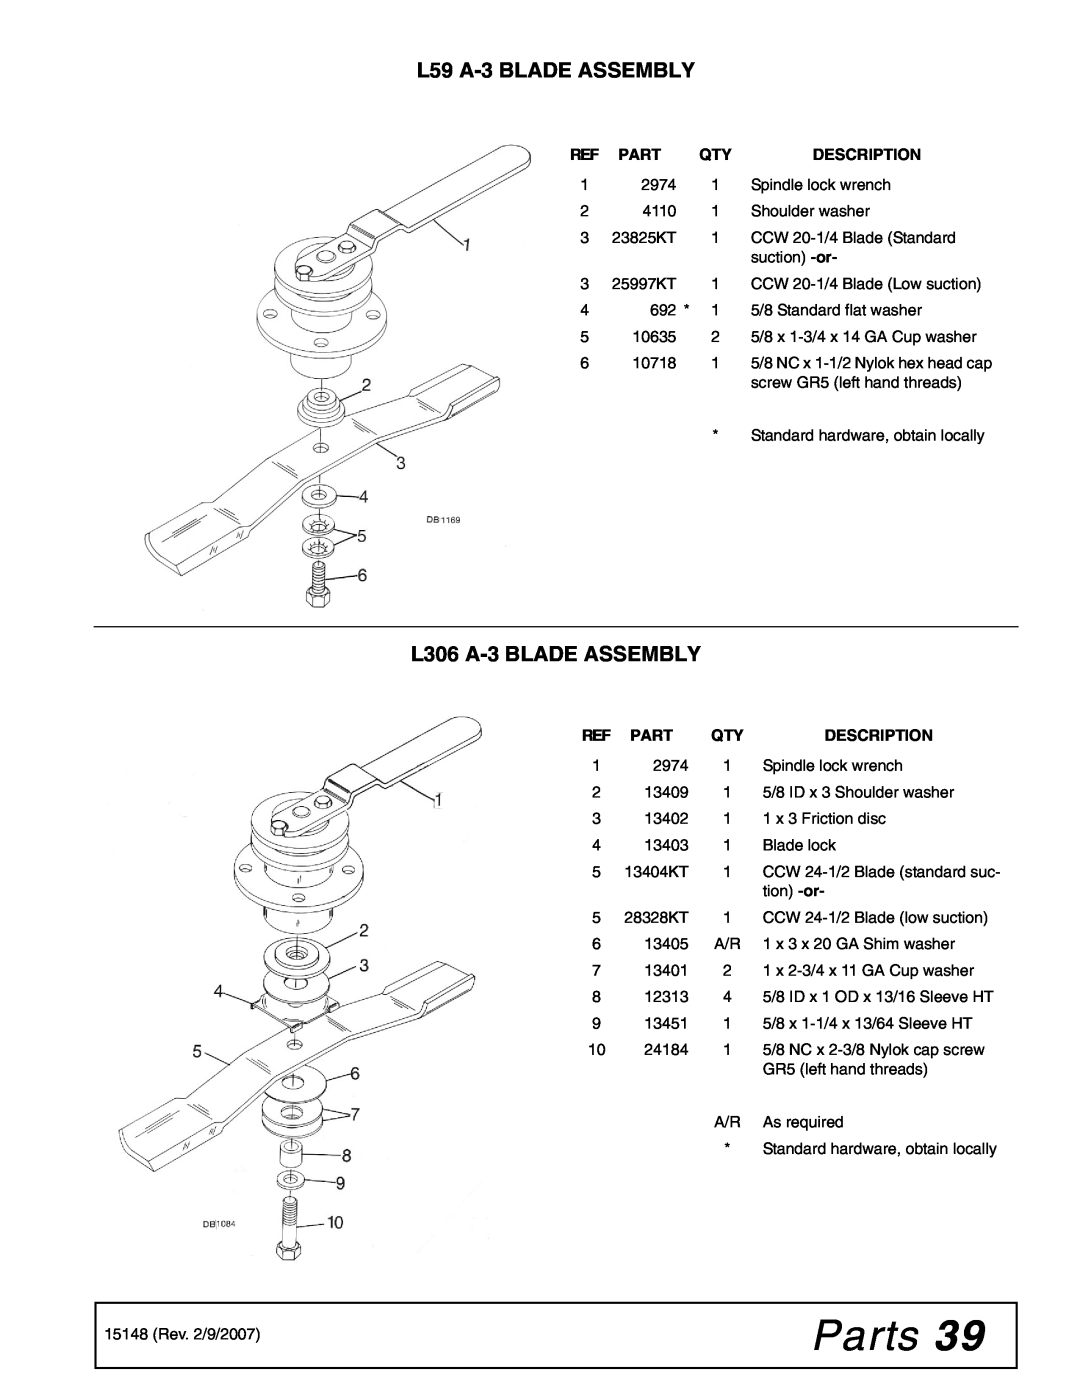 Woods Equipment L306A-3, L59A-3 manual L59 A-3 BLADE ASSEMBLY, L306 A-3 BLADE ASSEMBLY, Parts 